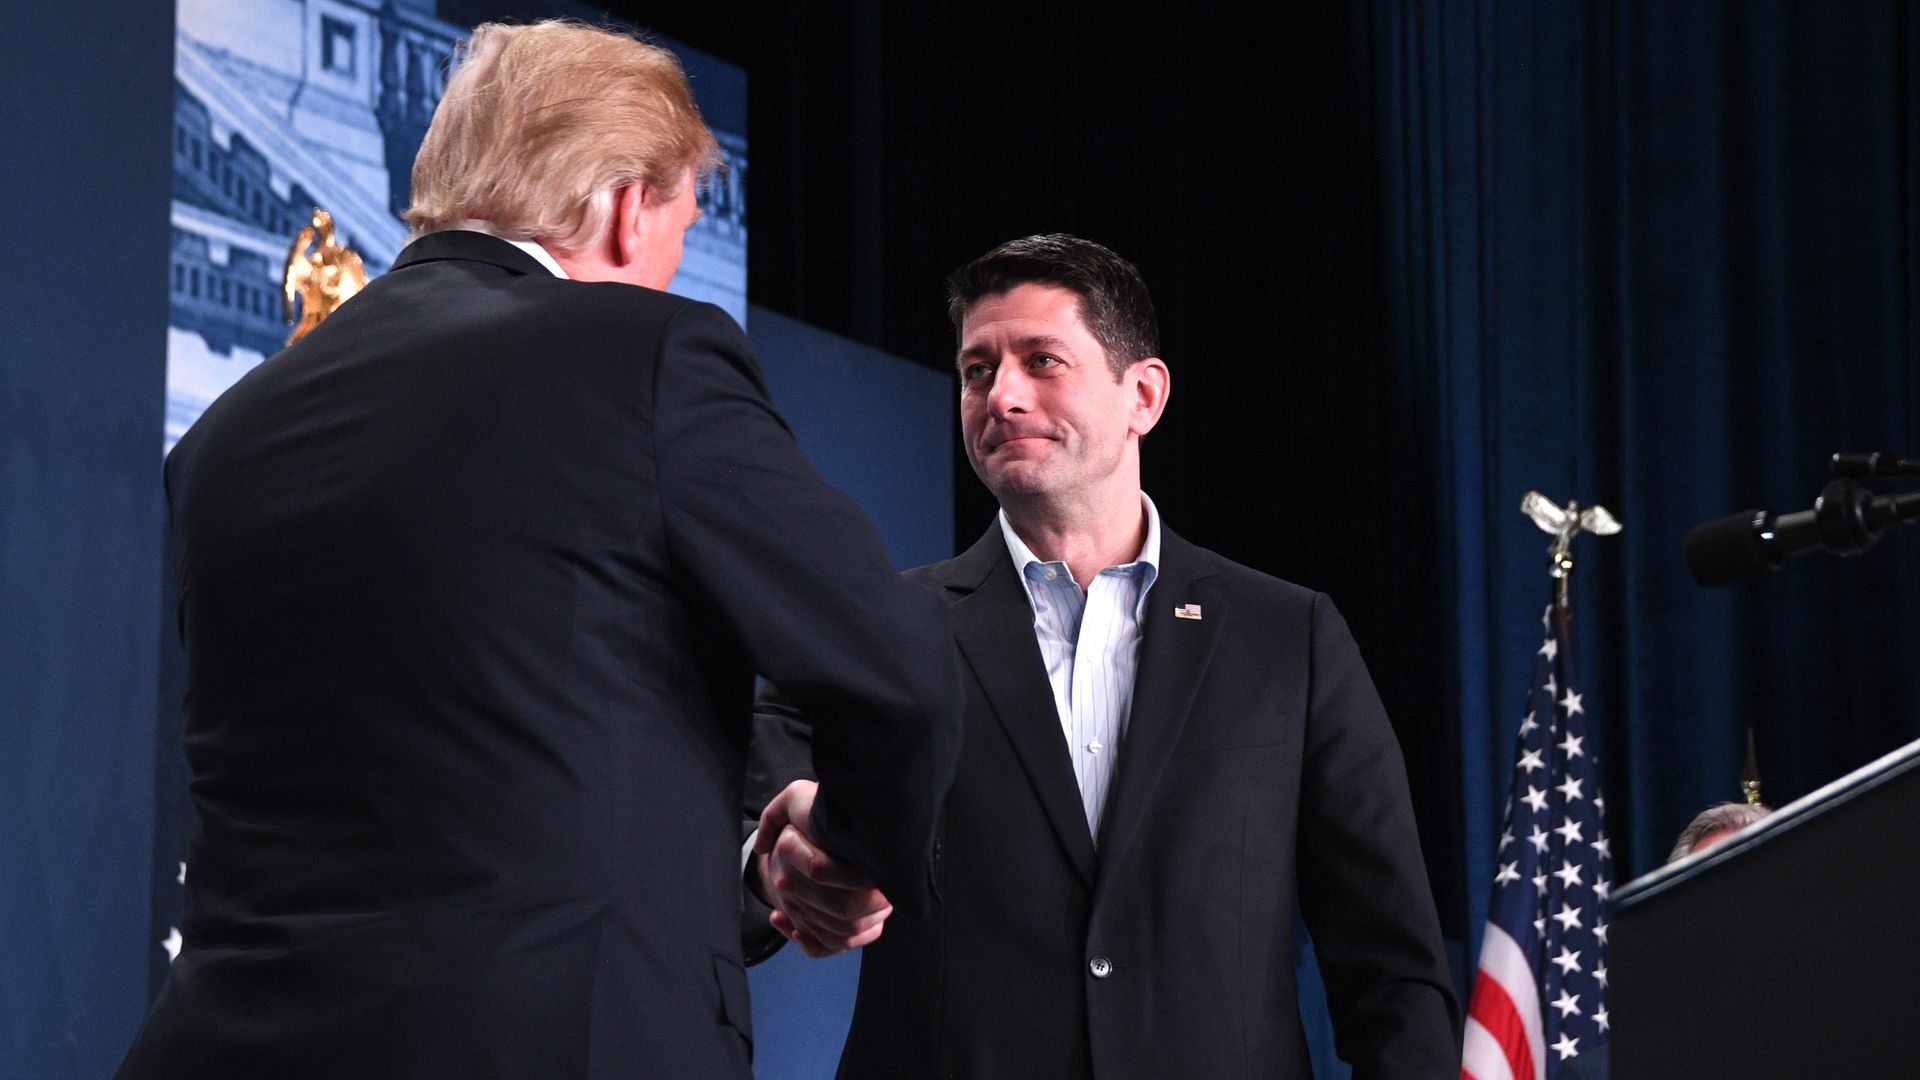 Paul Ryan shaking hands with Donald Trump